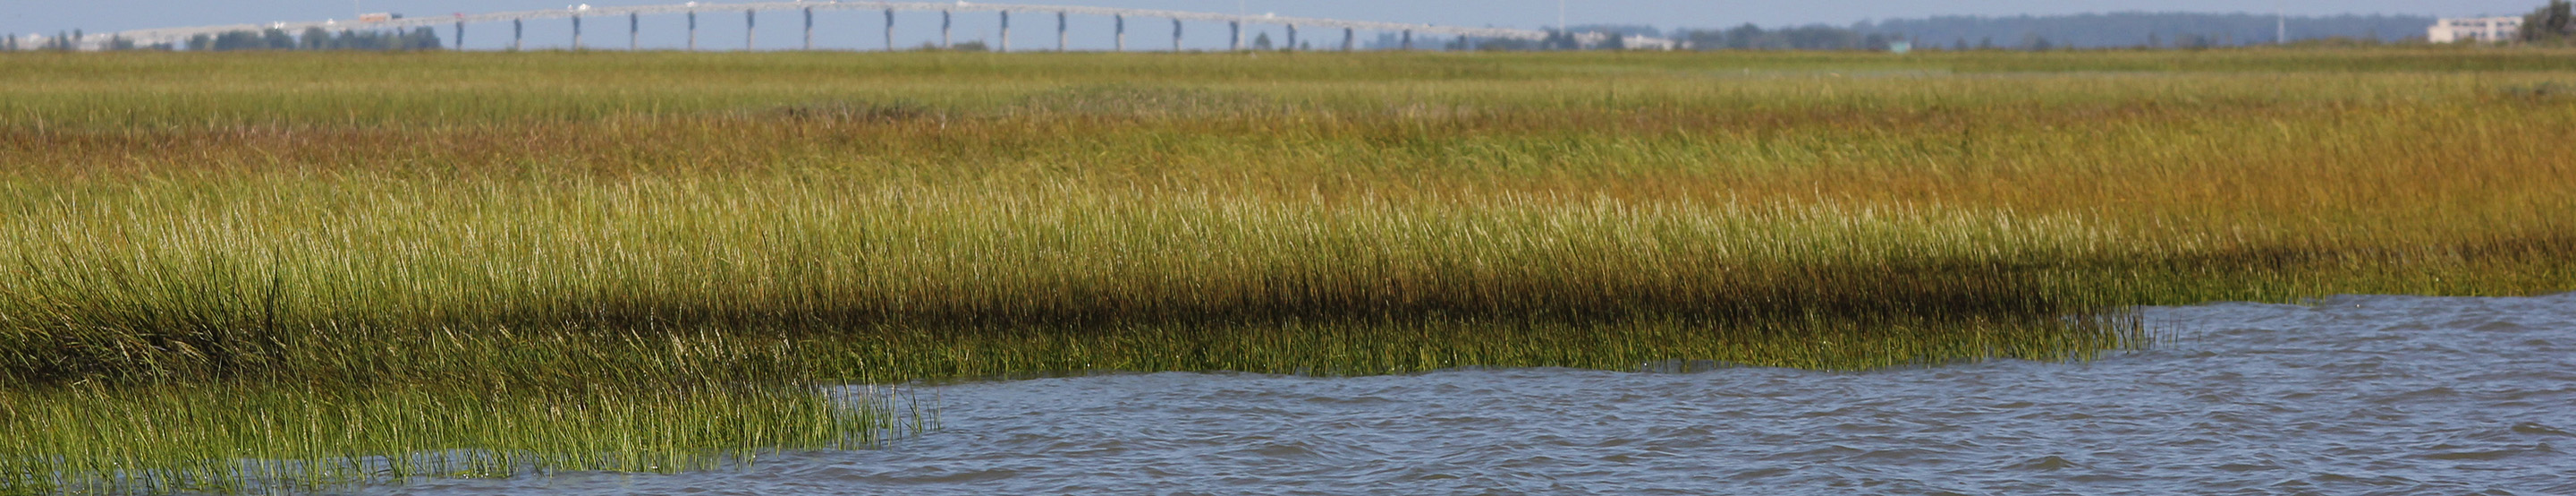 Oiled coasts mean oiled shorebirds: Brazil oil spill impacts shorebirds ...